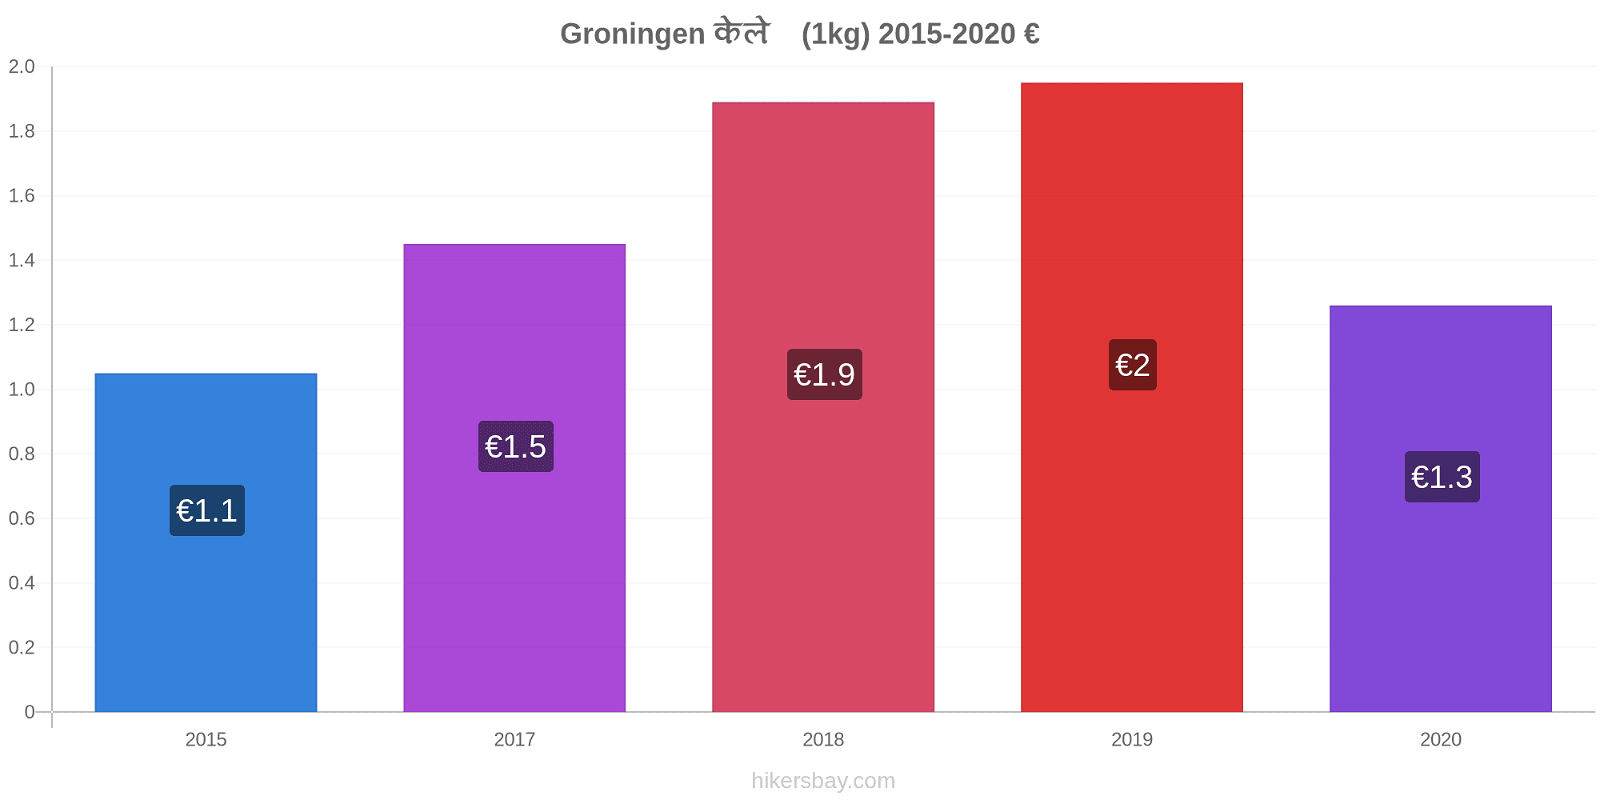 Groningen मूल्य परिवर्तन केले (1kg) hikersbay.com